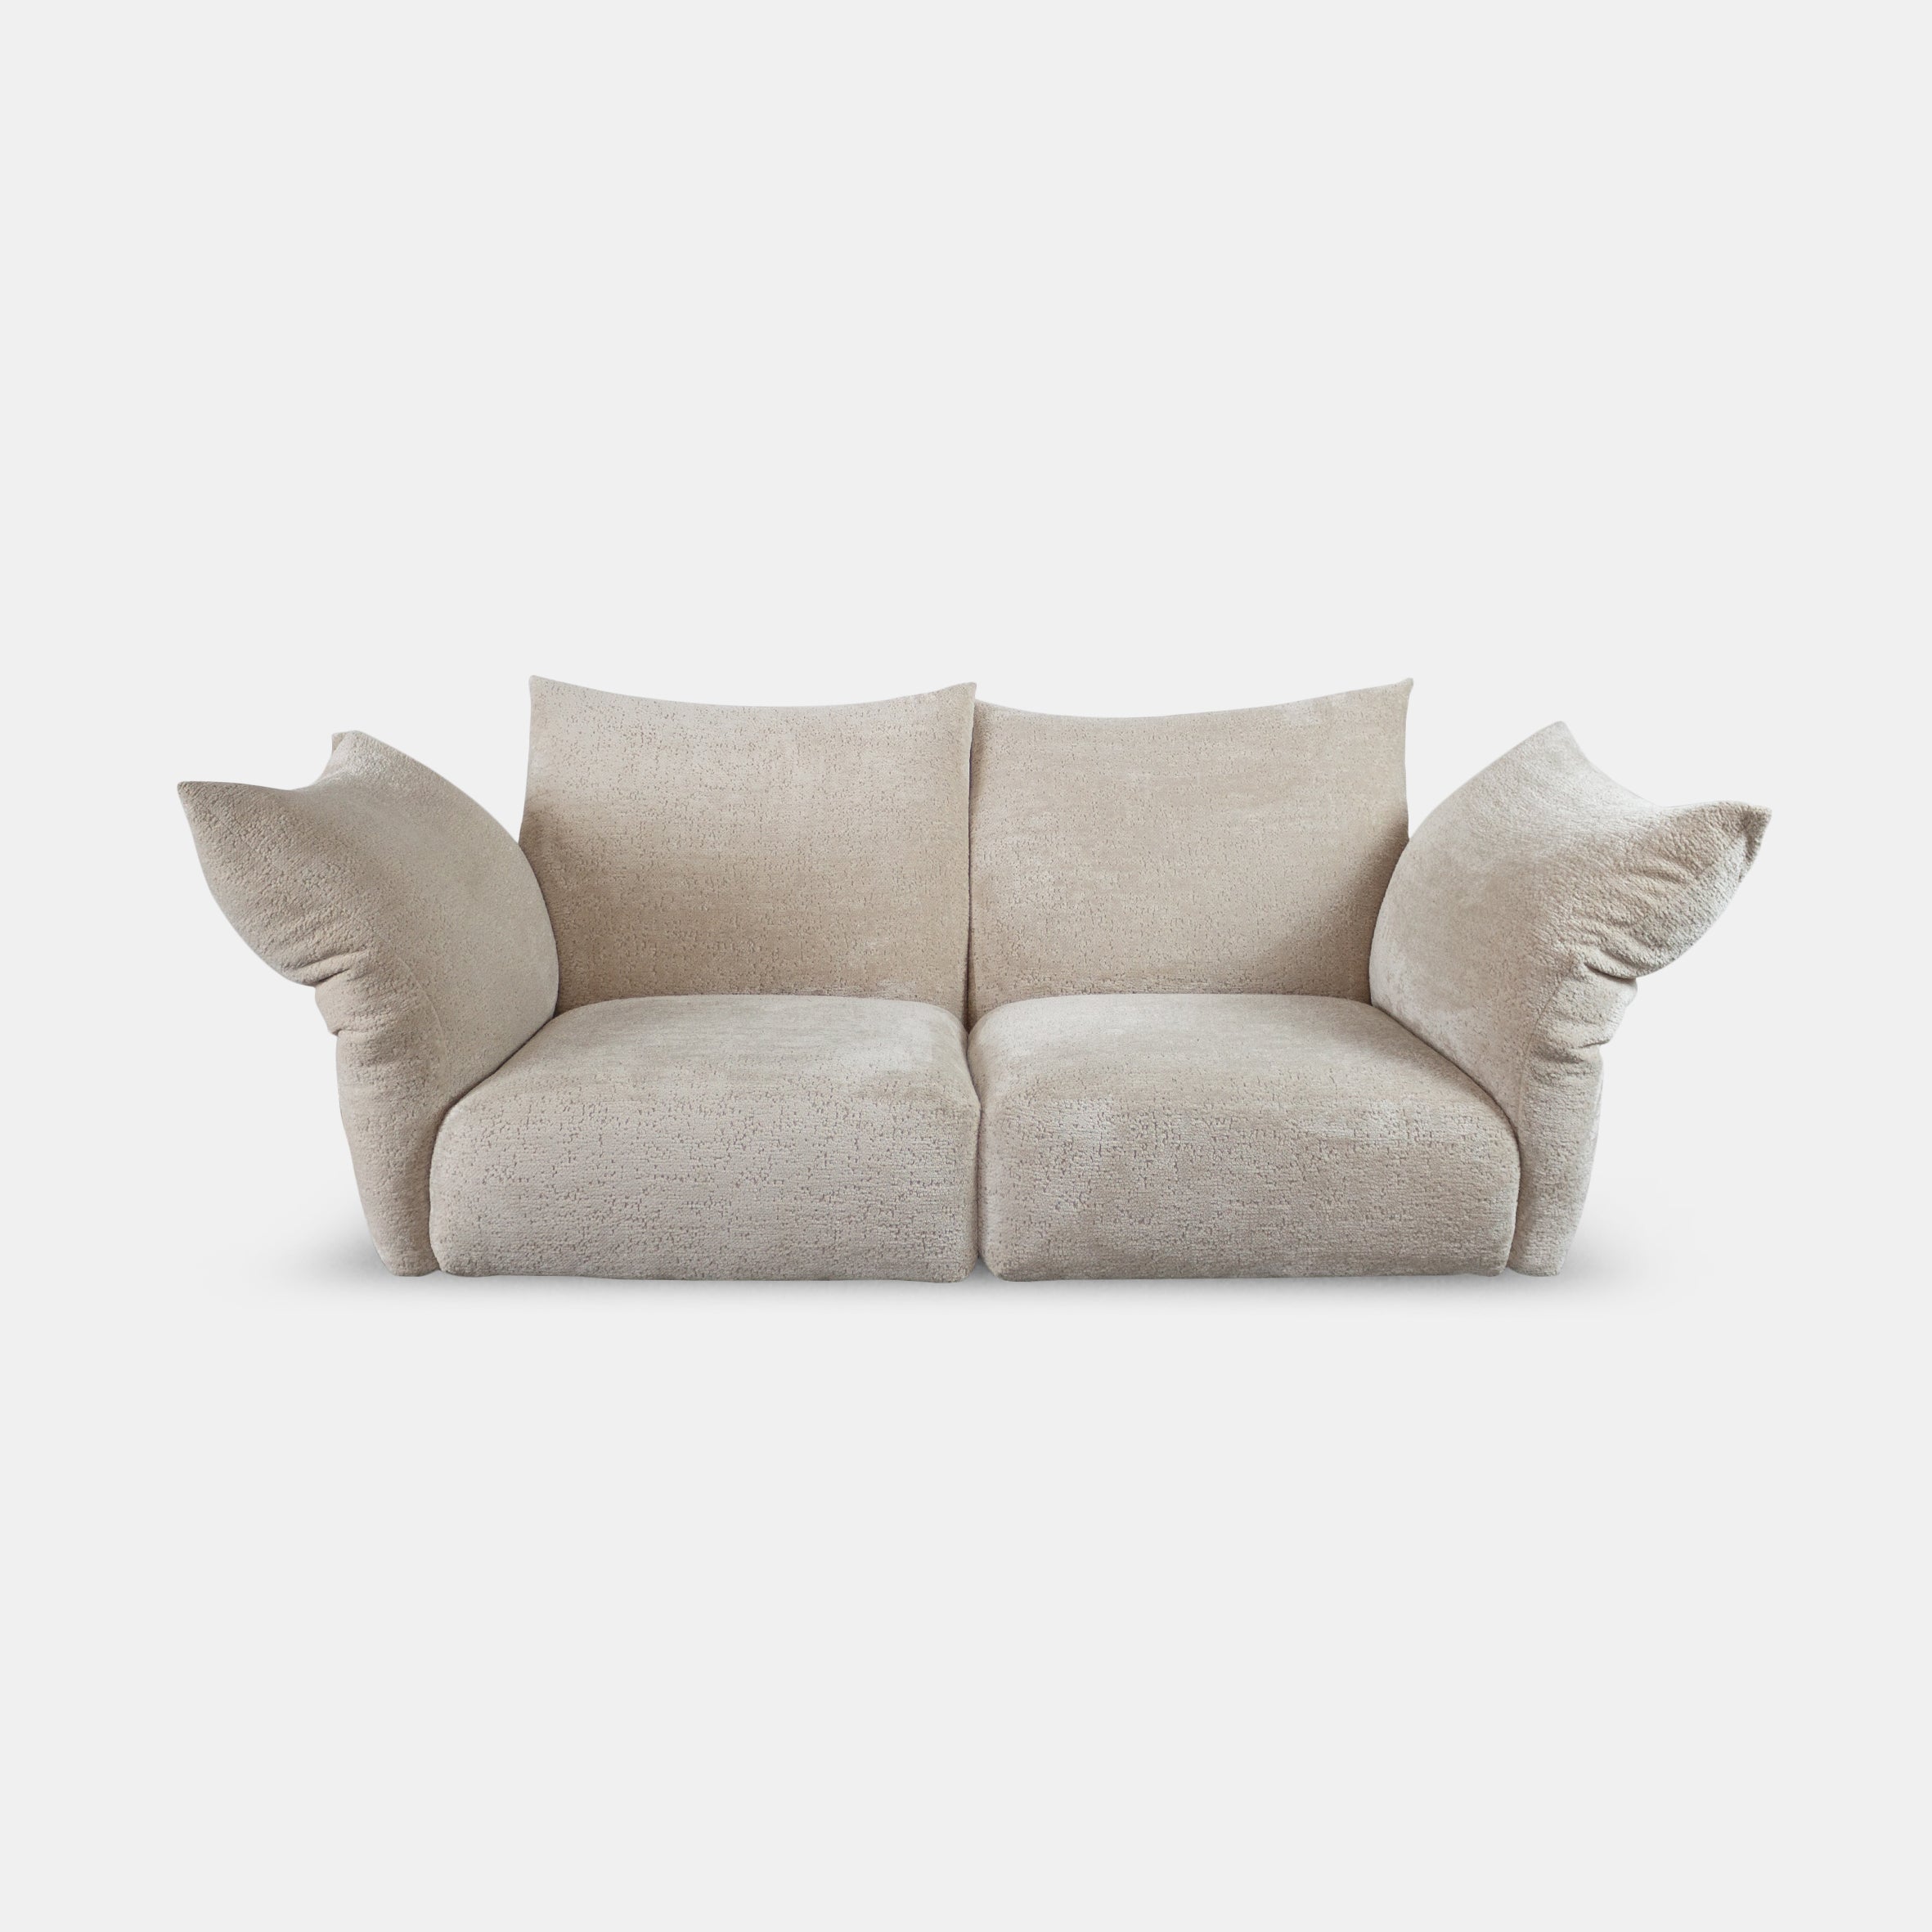 Standard 2 Seater Sofa - Ex Display